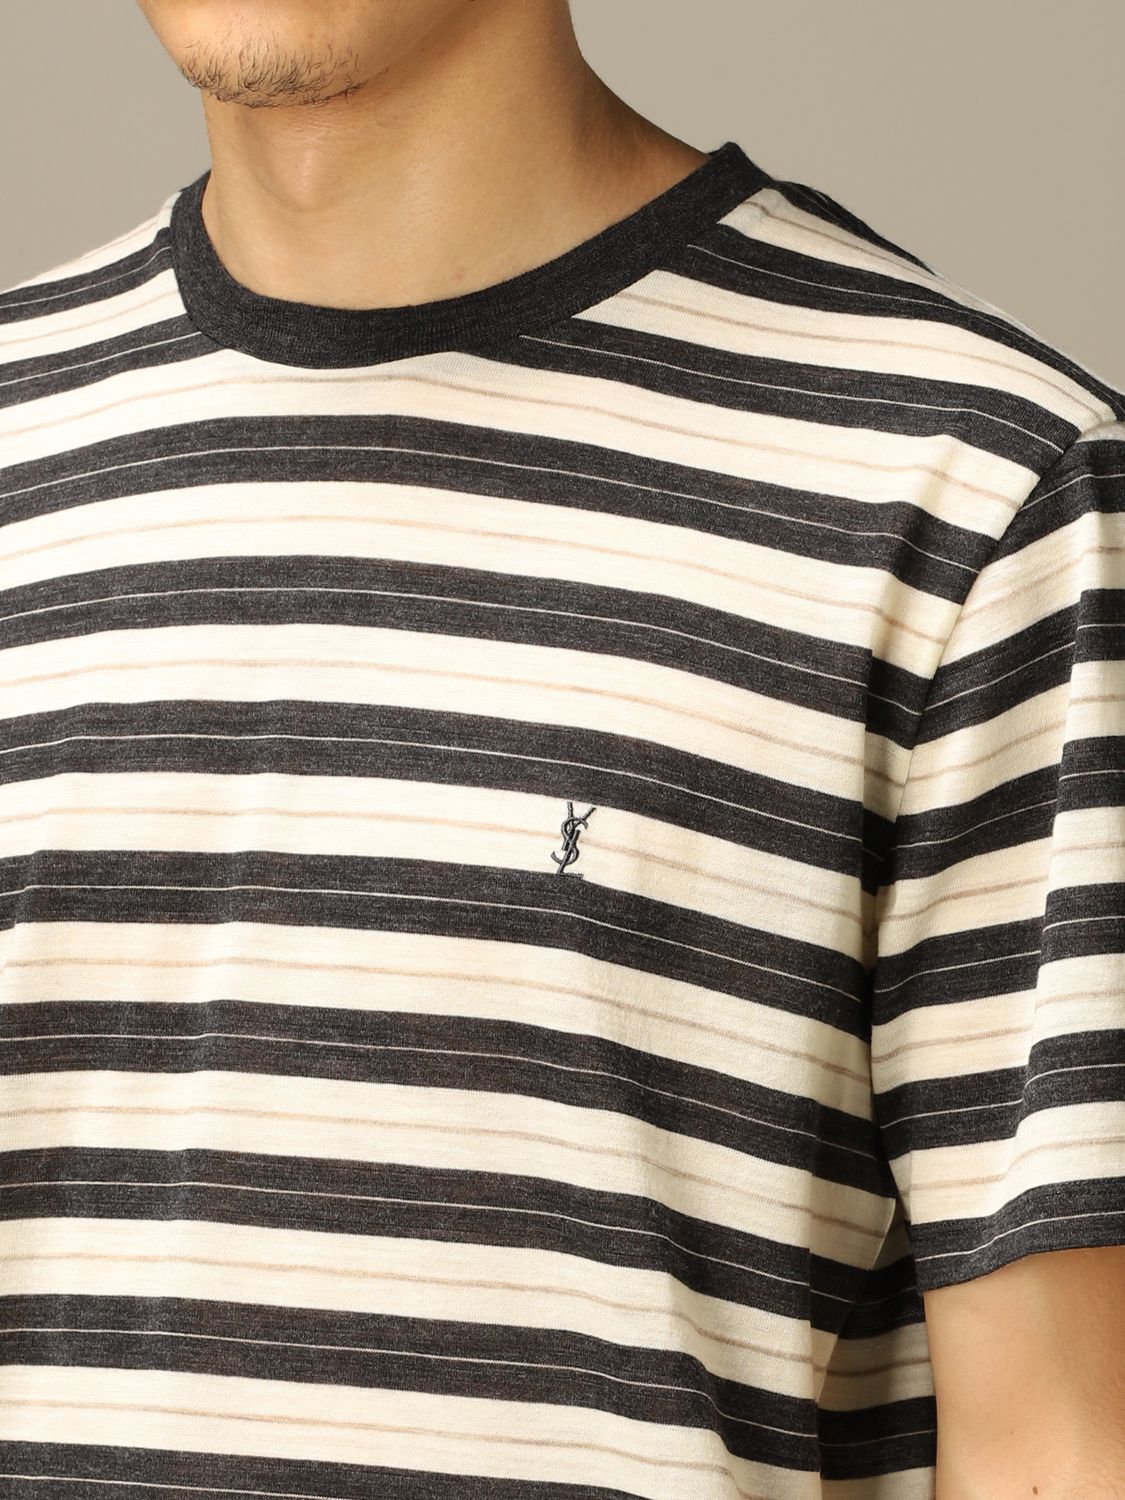 ysl striped shirt